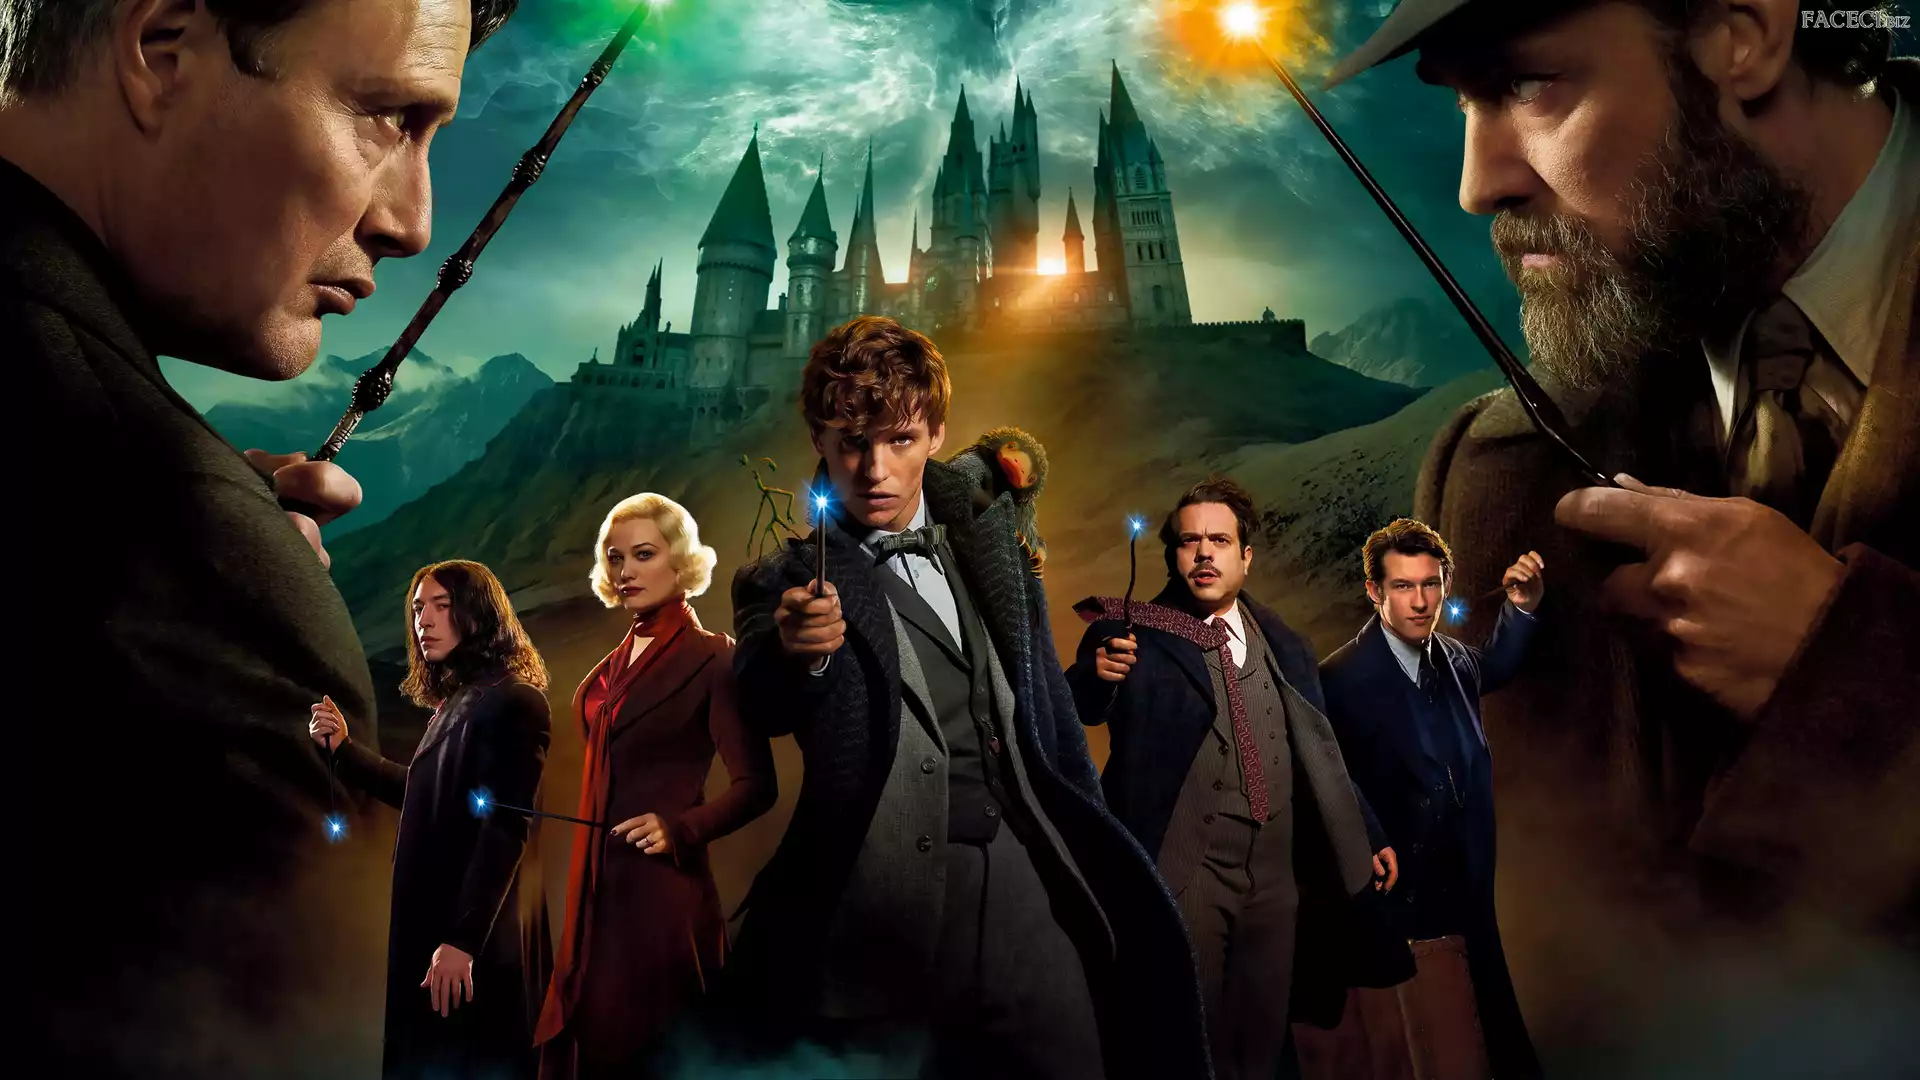 Jude Law, Aktorzy, Film, Fantastic Beasts 3 The Secrets of Dumbledorea, Mads Mikkelsen, Eddie Redmayne